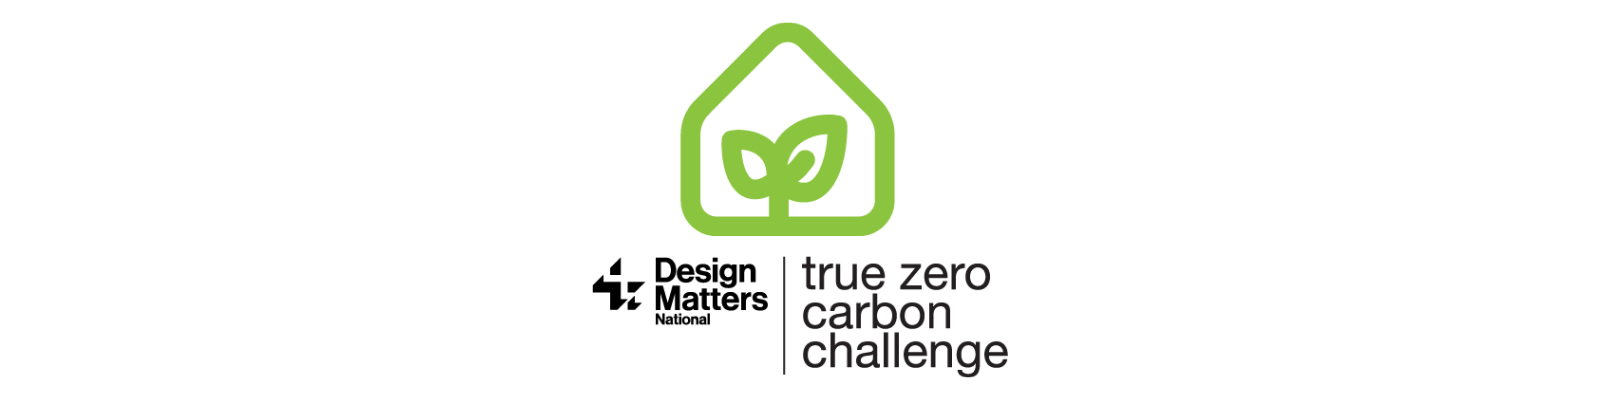 True Zero Carbon Challenge Entry Details